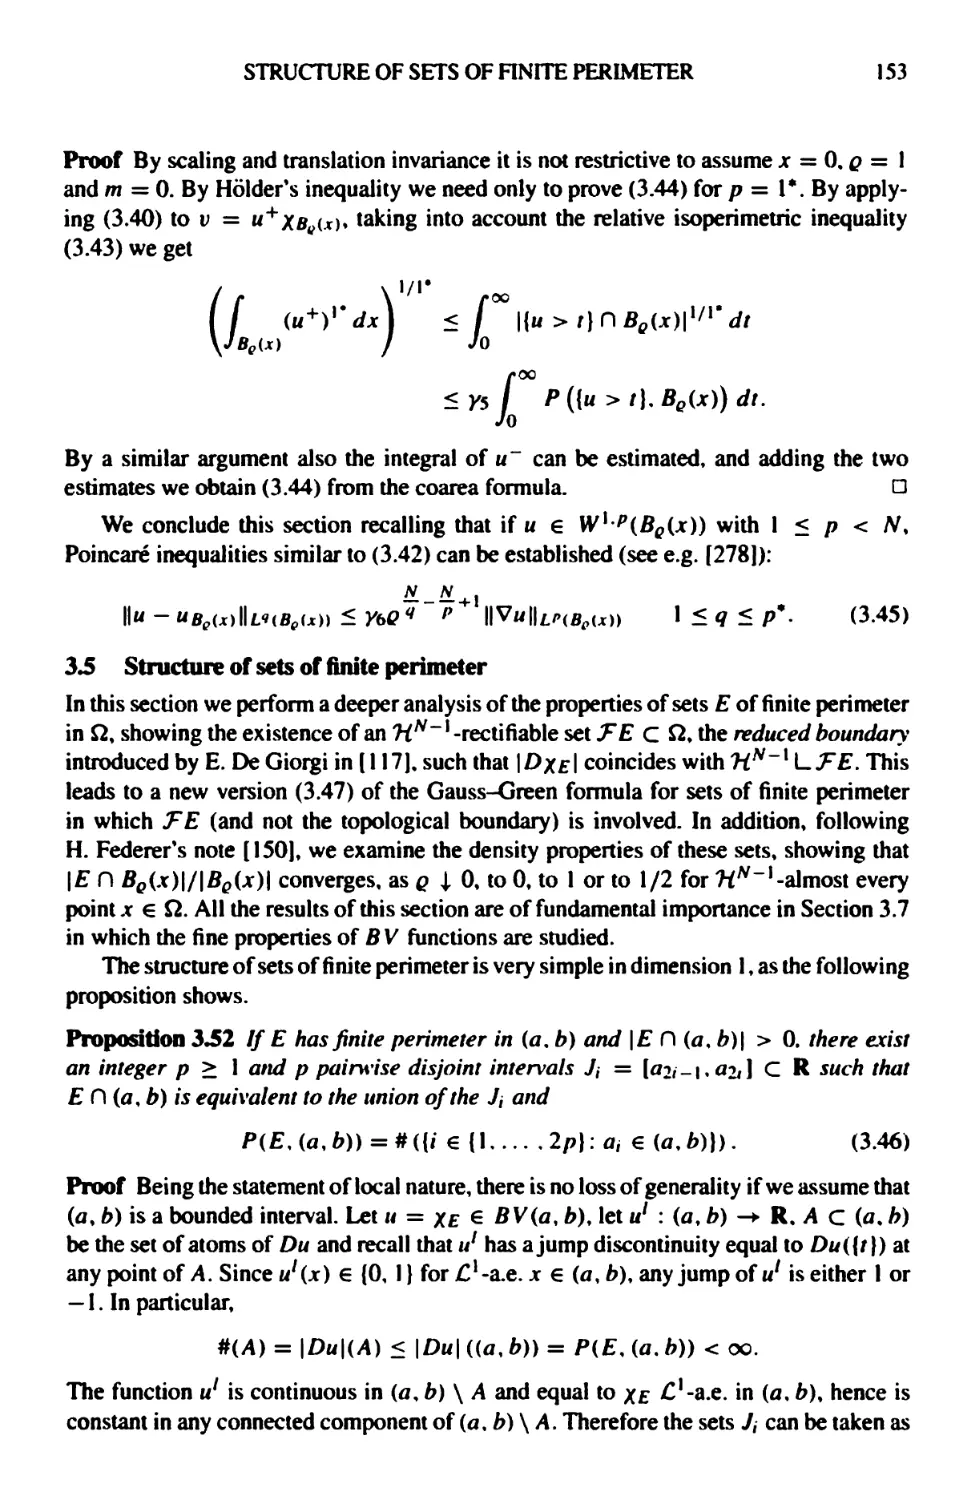 3.5 Structure of sets of finite perimeter